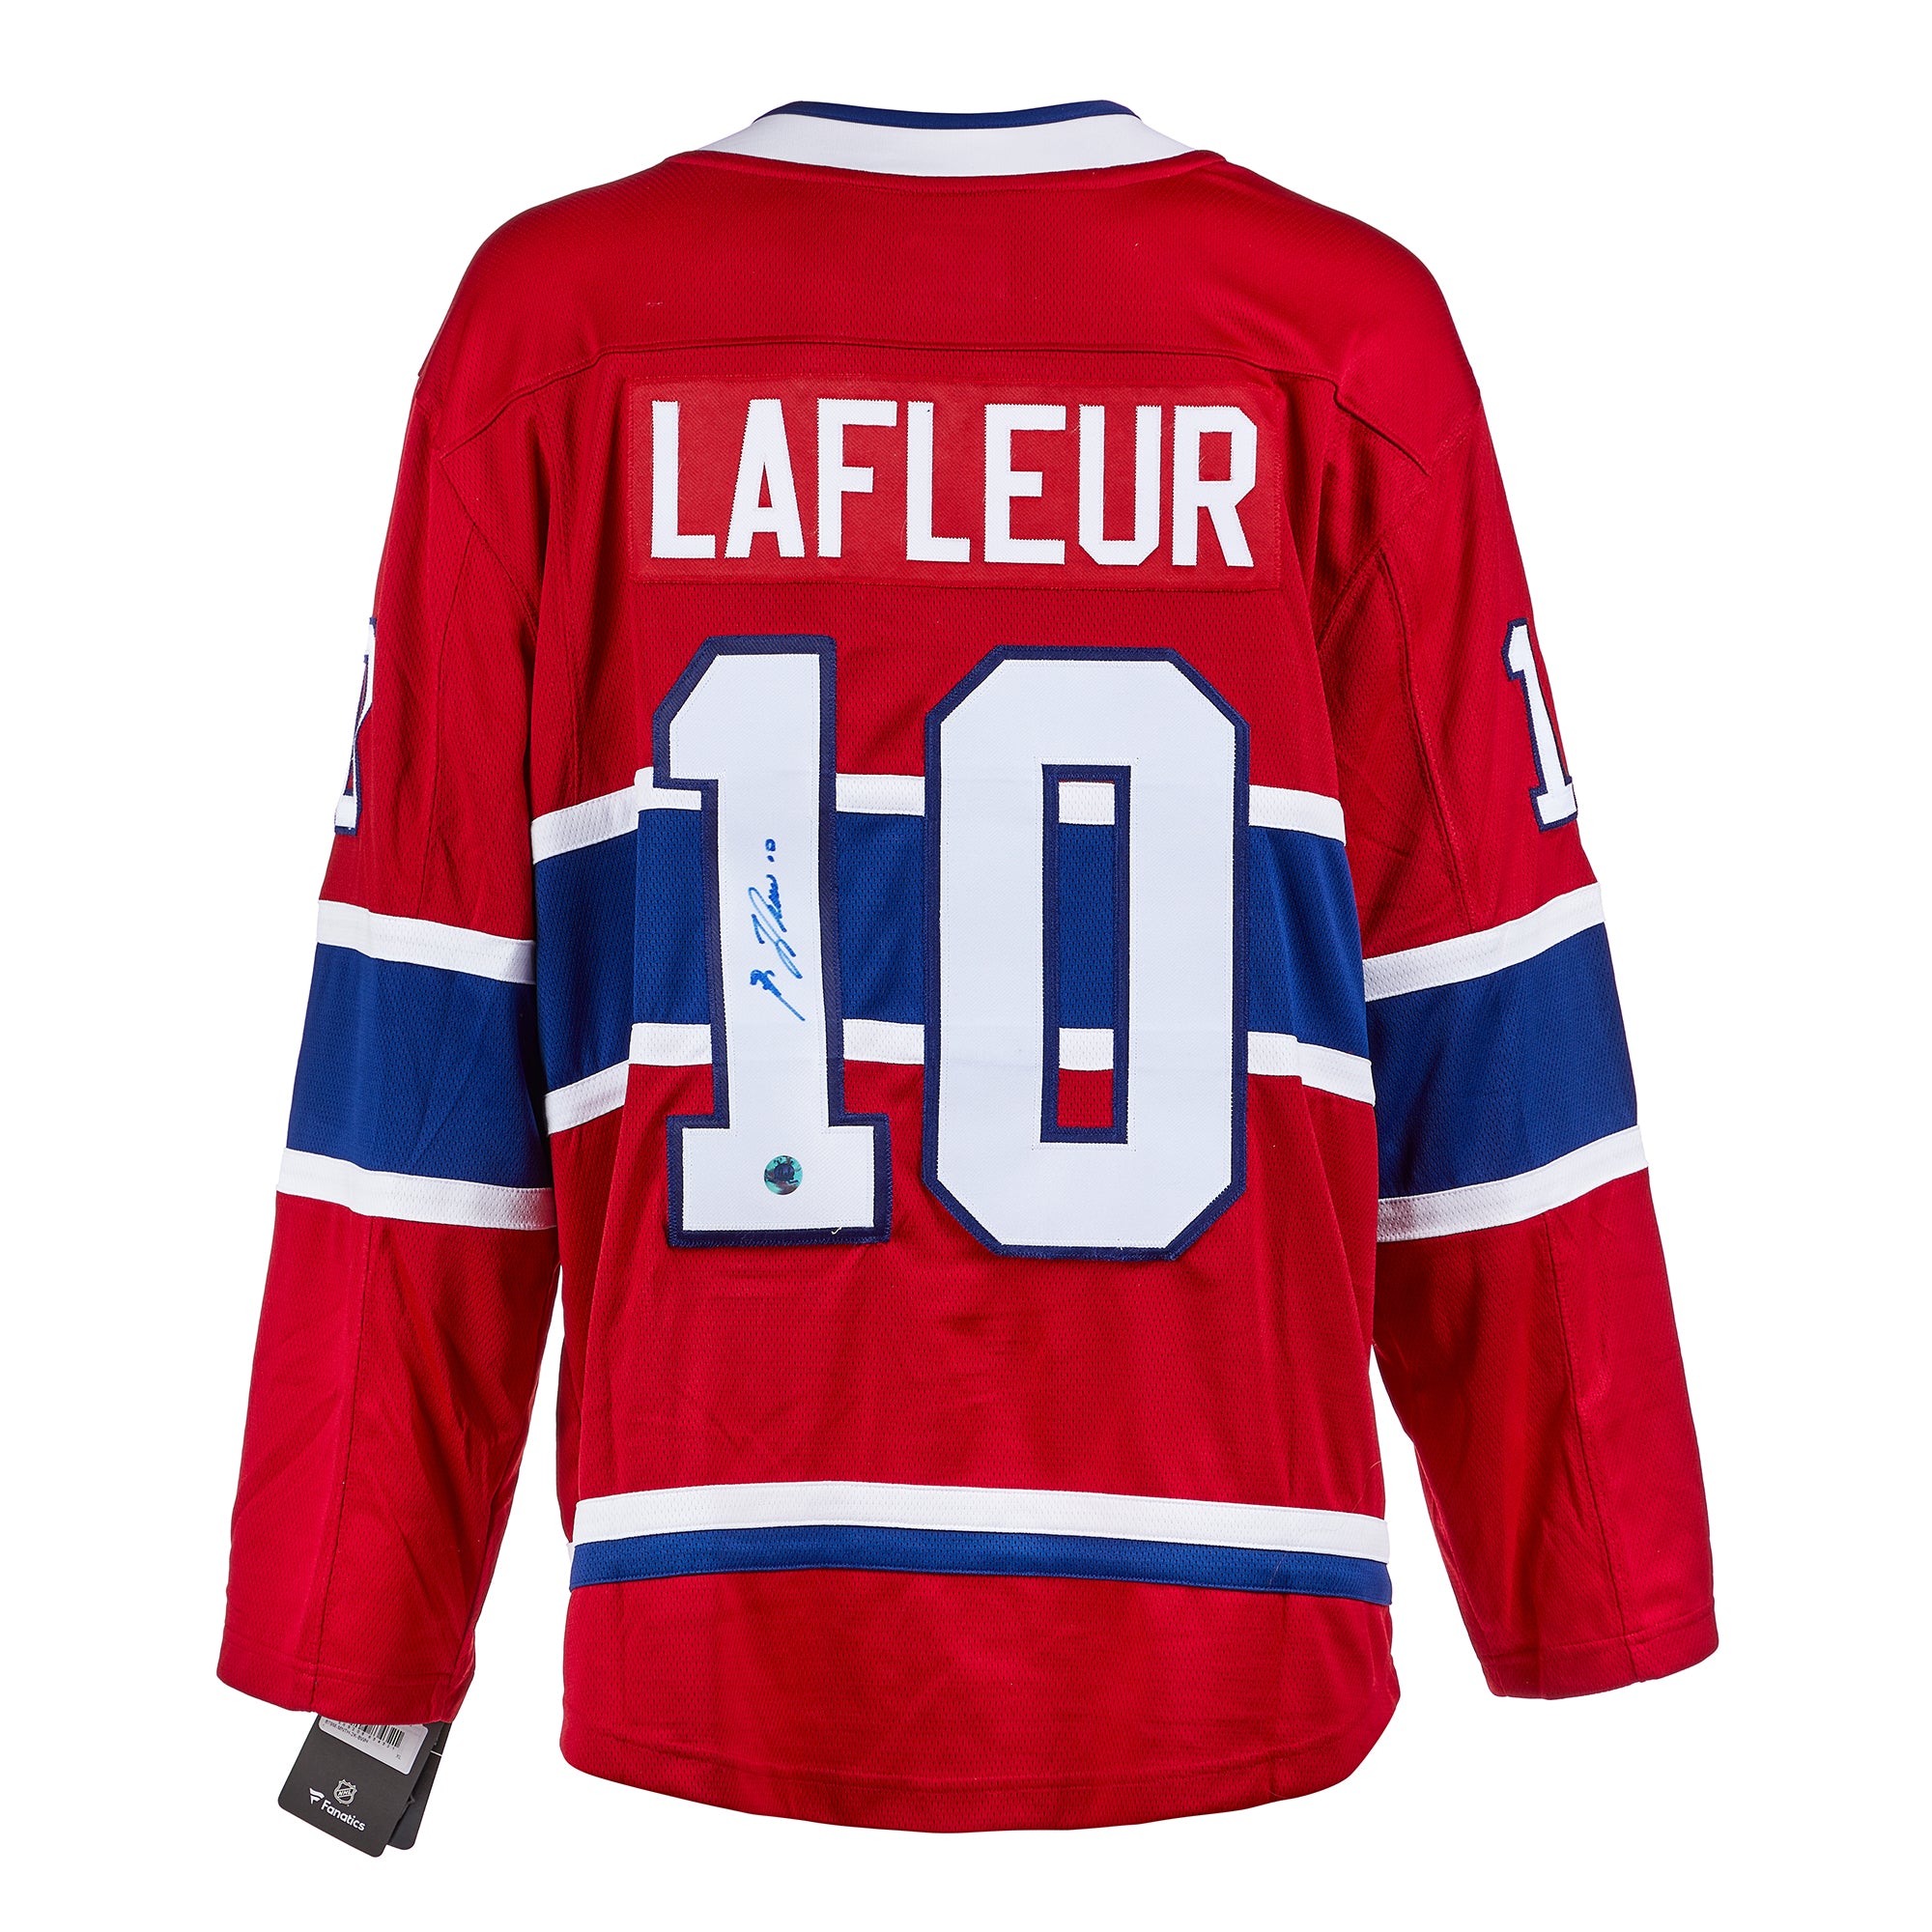 Guy Lafleur Jersey Canada Purchase Online